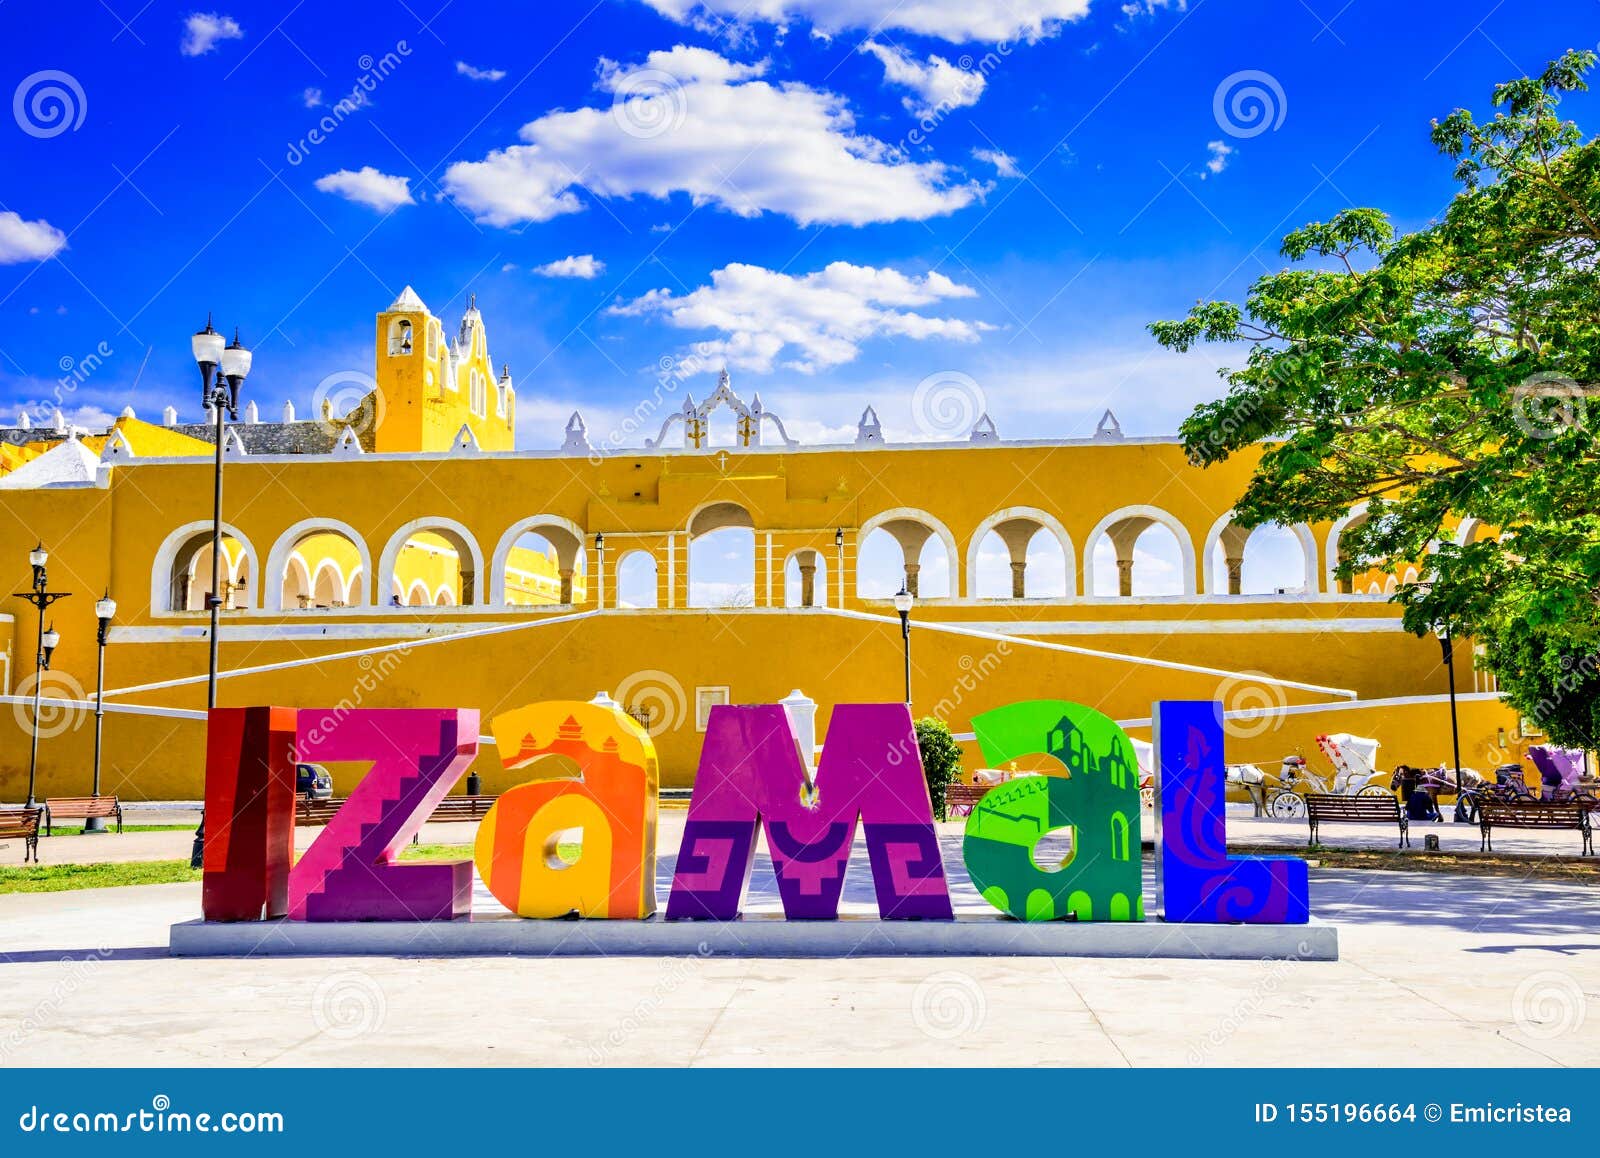 izamal, yucatan in mexico - central america